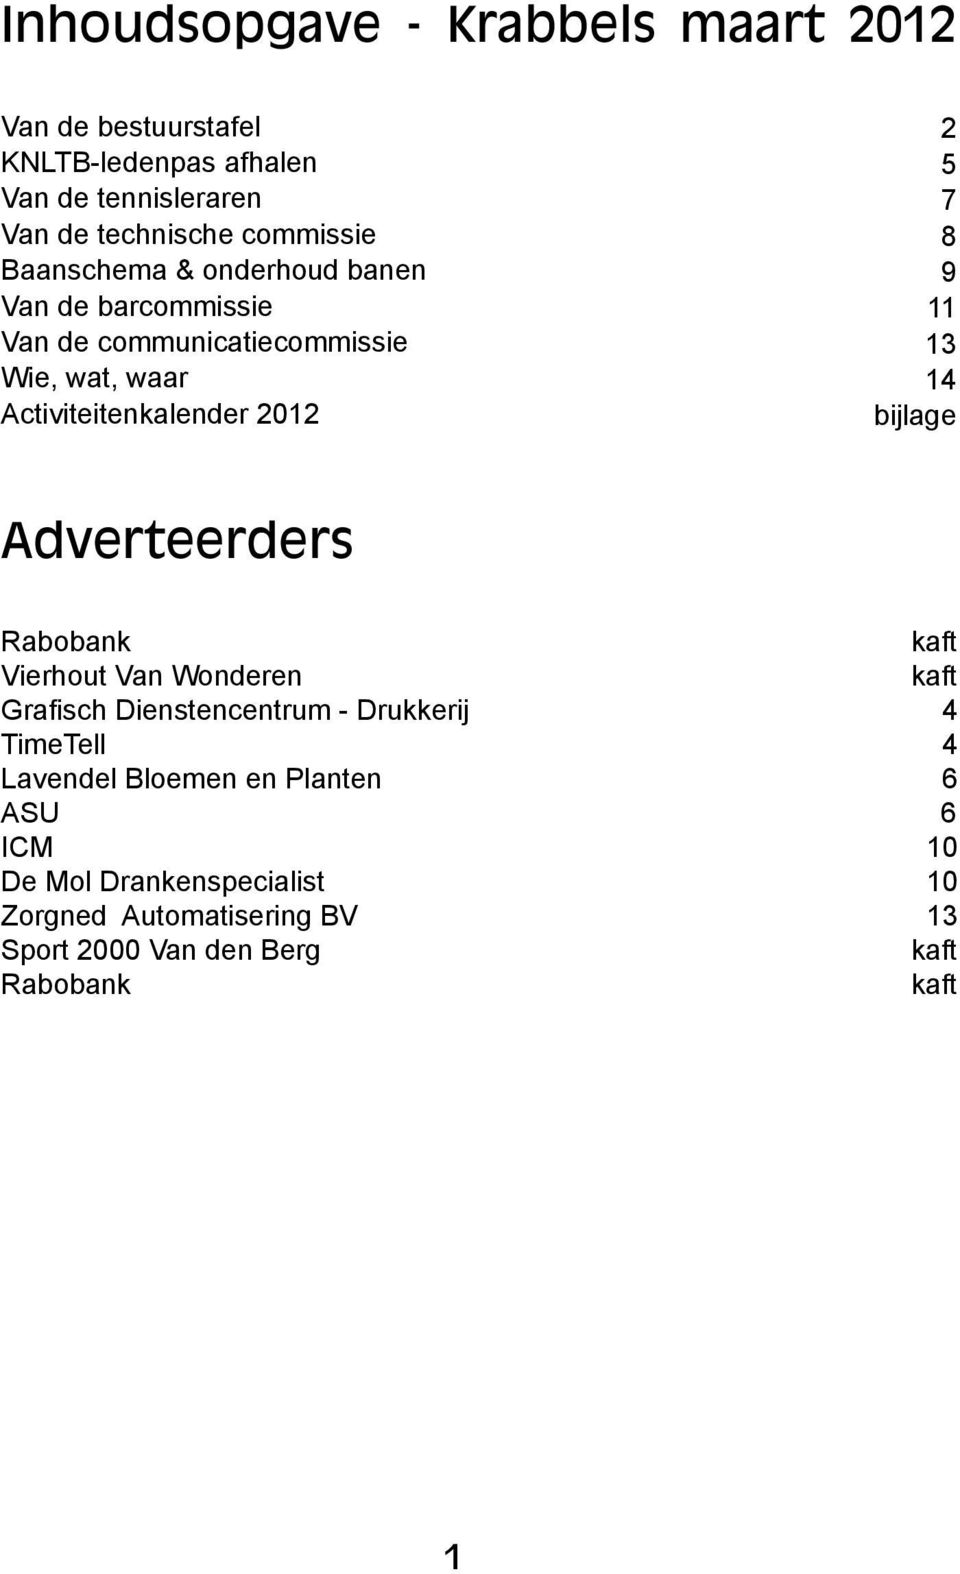 11 13 14 bijlage Adverteerders Rabobank kaft Vierhout Van Wonderen kaft Grafisch Dienstencentrum - Drukkerij 4 TimeTell 4 Lavendel